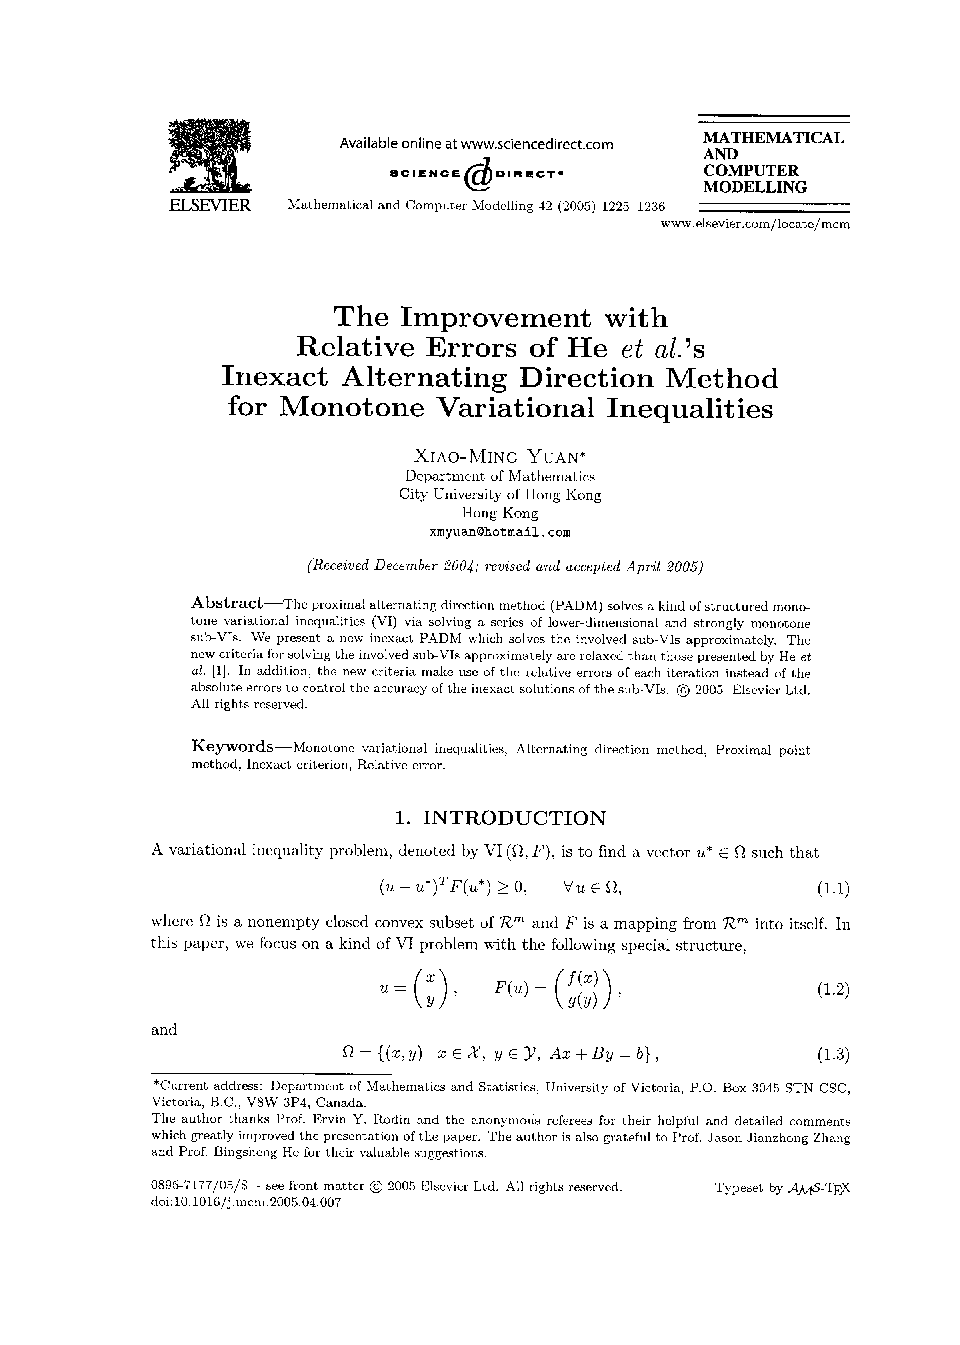 The improvement with relative errors of he et al.'s inexact alternating direction method for monotone variational inequalities